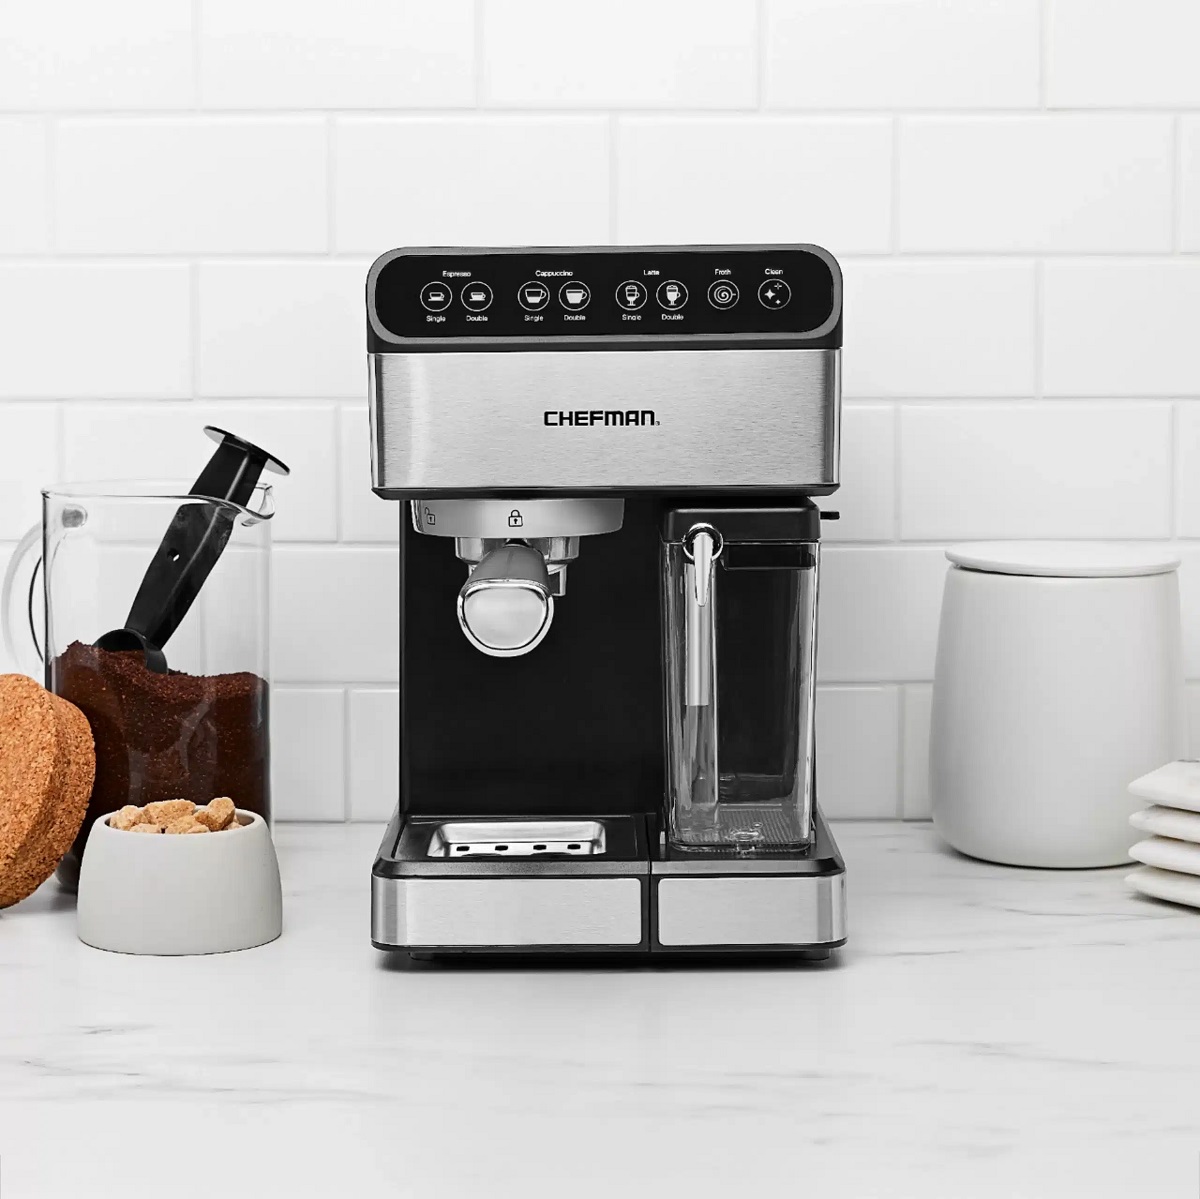 How To Use The Chefman Espresso Machine